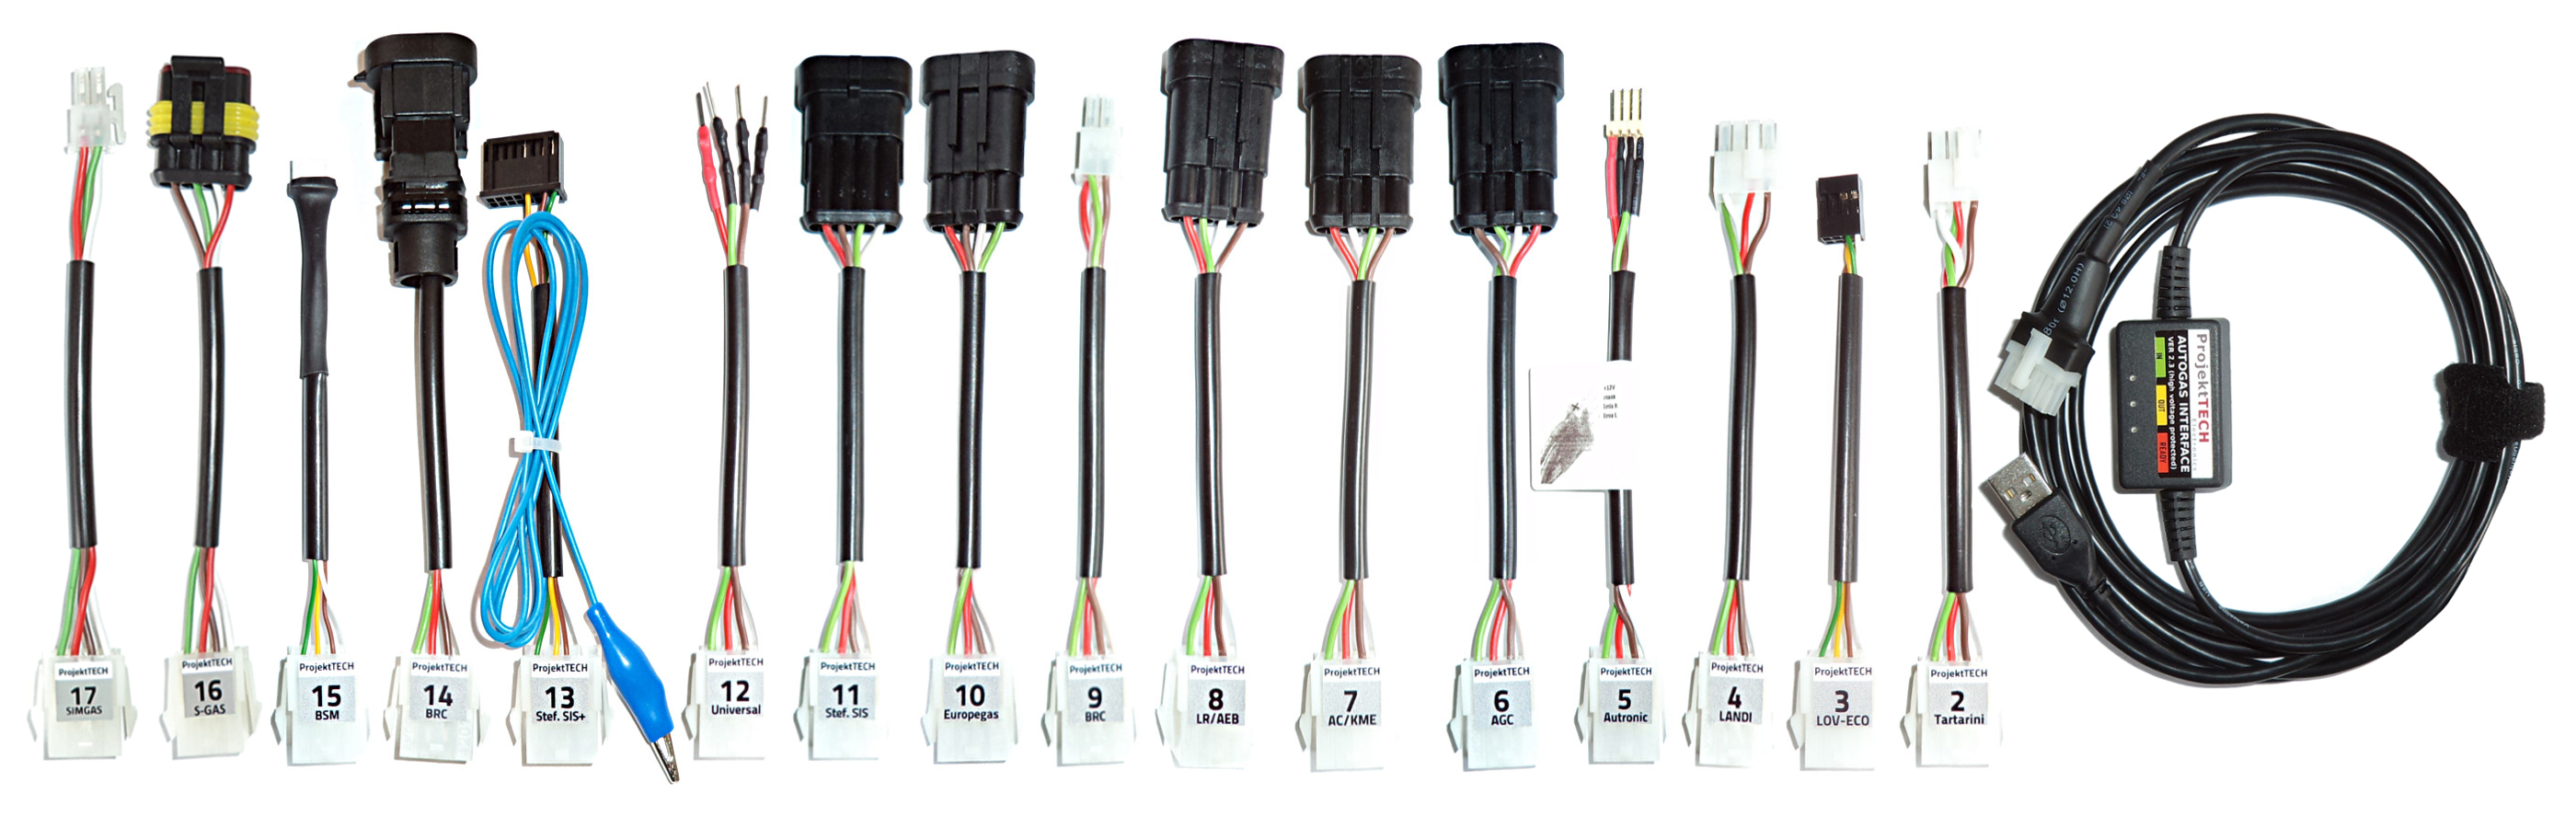 Set of 17 cables kme, stag, lov-eco, compact, landi renzo, brc, s-gas, europegas, stefanelli, universal, sis, bsm, autronic, just heavy, tartarini, lendi, simgas